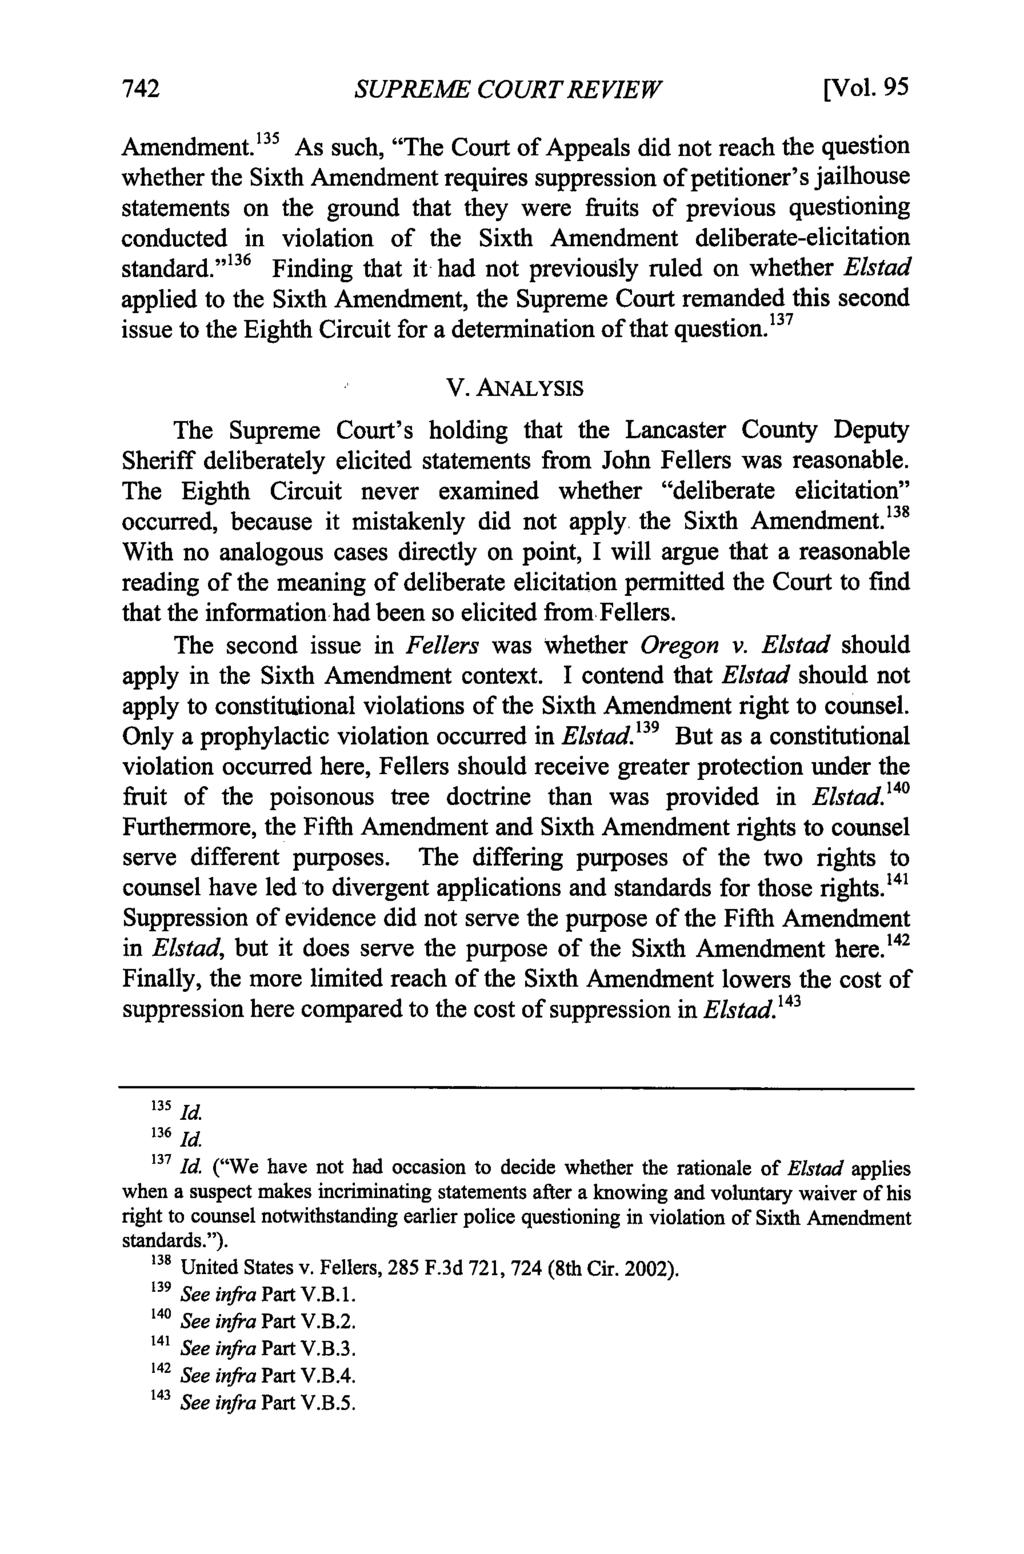 SUPREME COURT REVIEW [Vol. 95 Amendment.